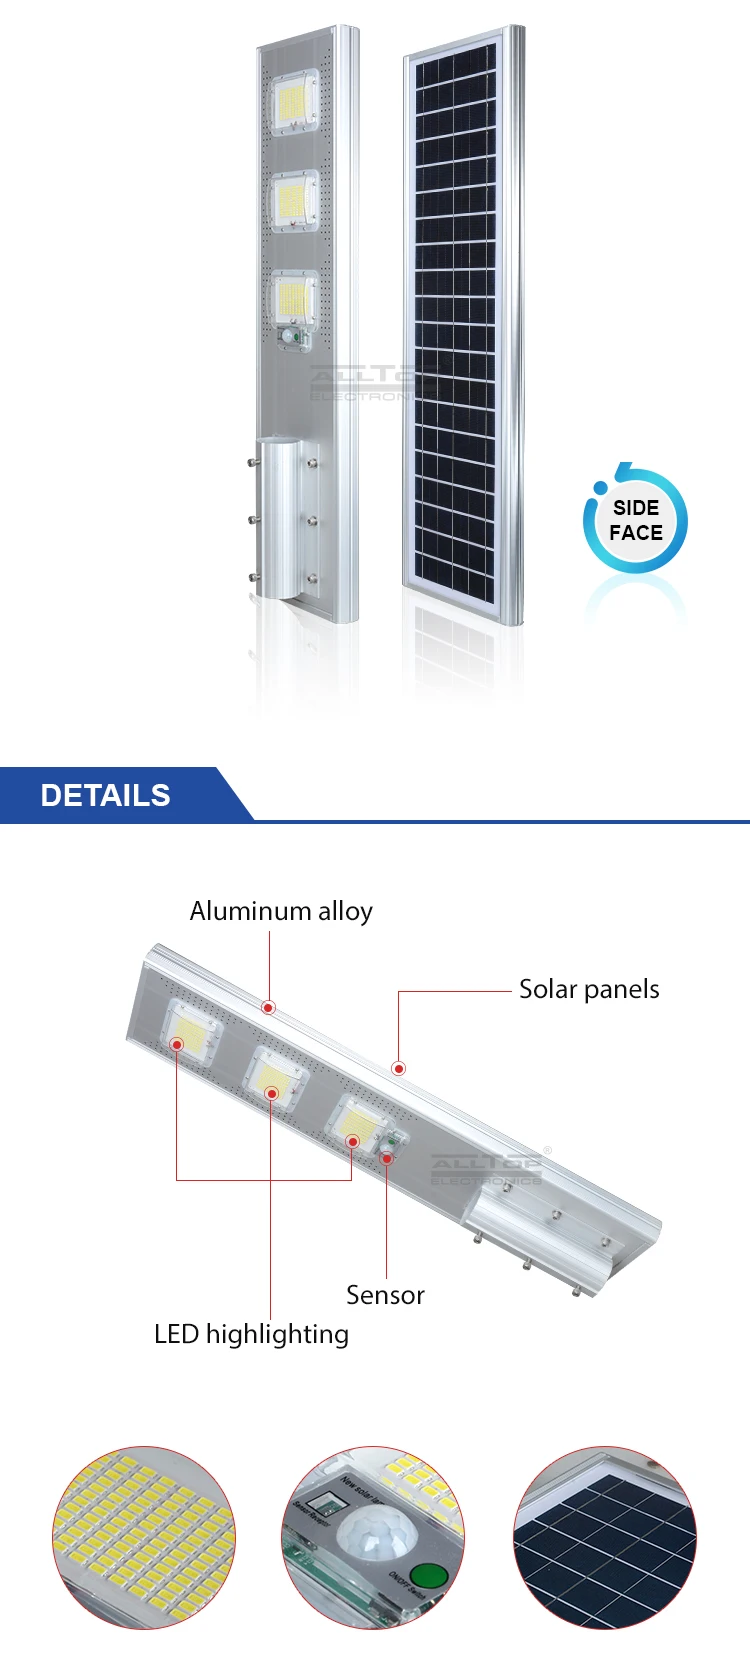 ALLTOP Aluminum waterproof IP65 module 60watt 120watt 180watt all in one solar led street light